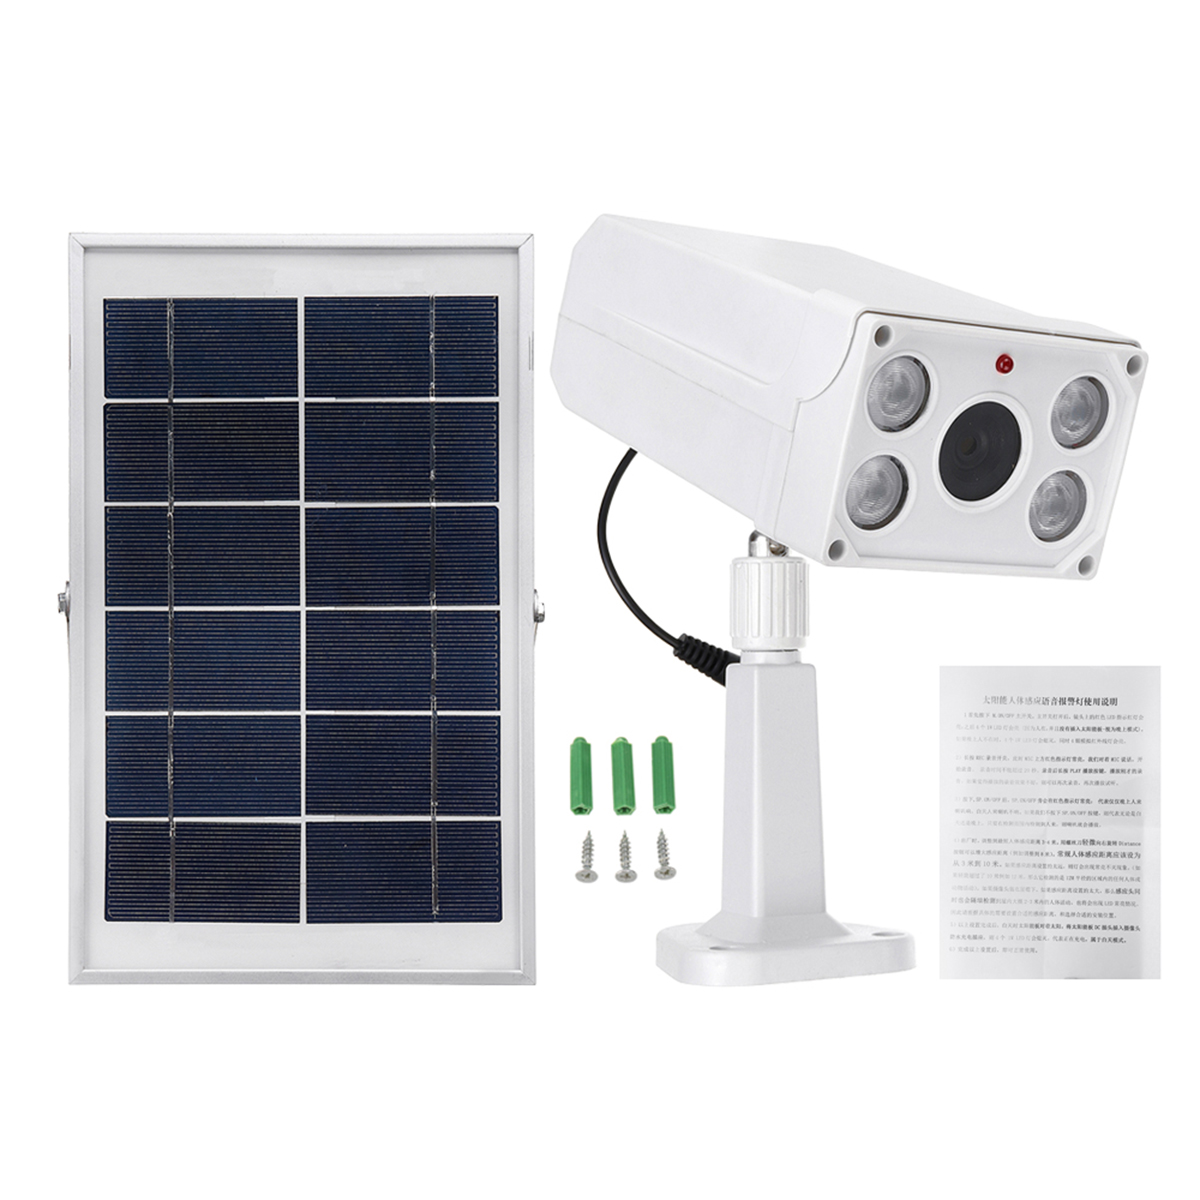 

4W LED Motion Sensor Detector Solar Light IP65 Waterproof Security Alarm System Kit Voice Alarm with Solar Powered Human